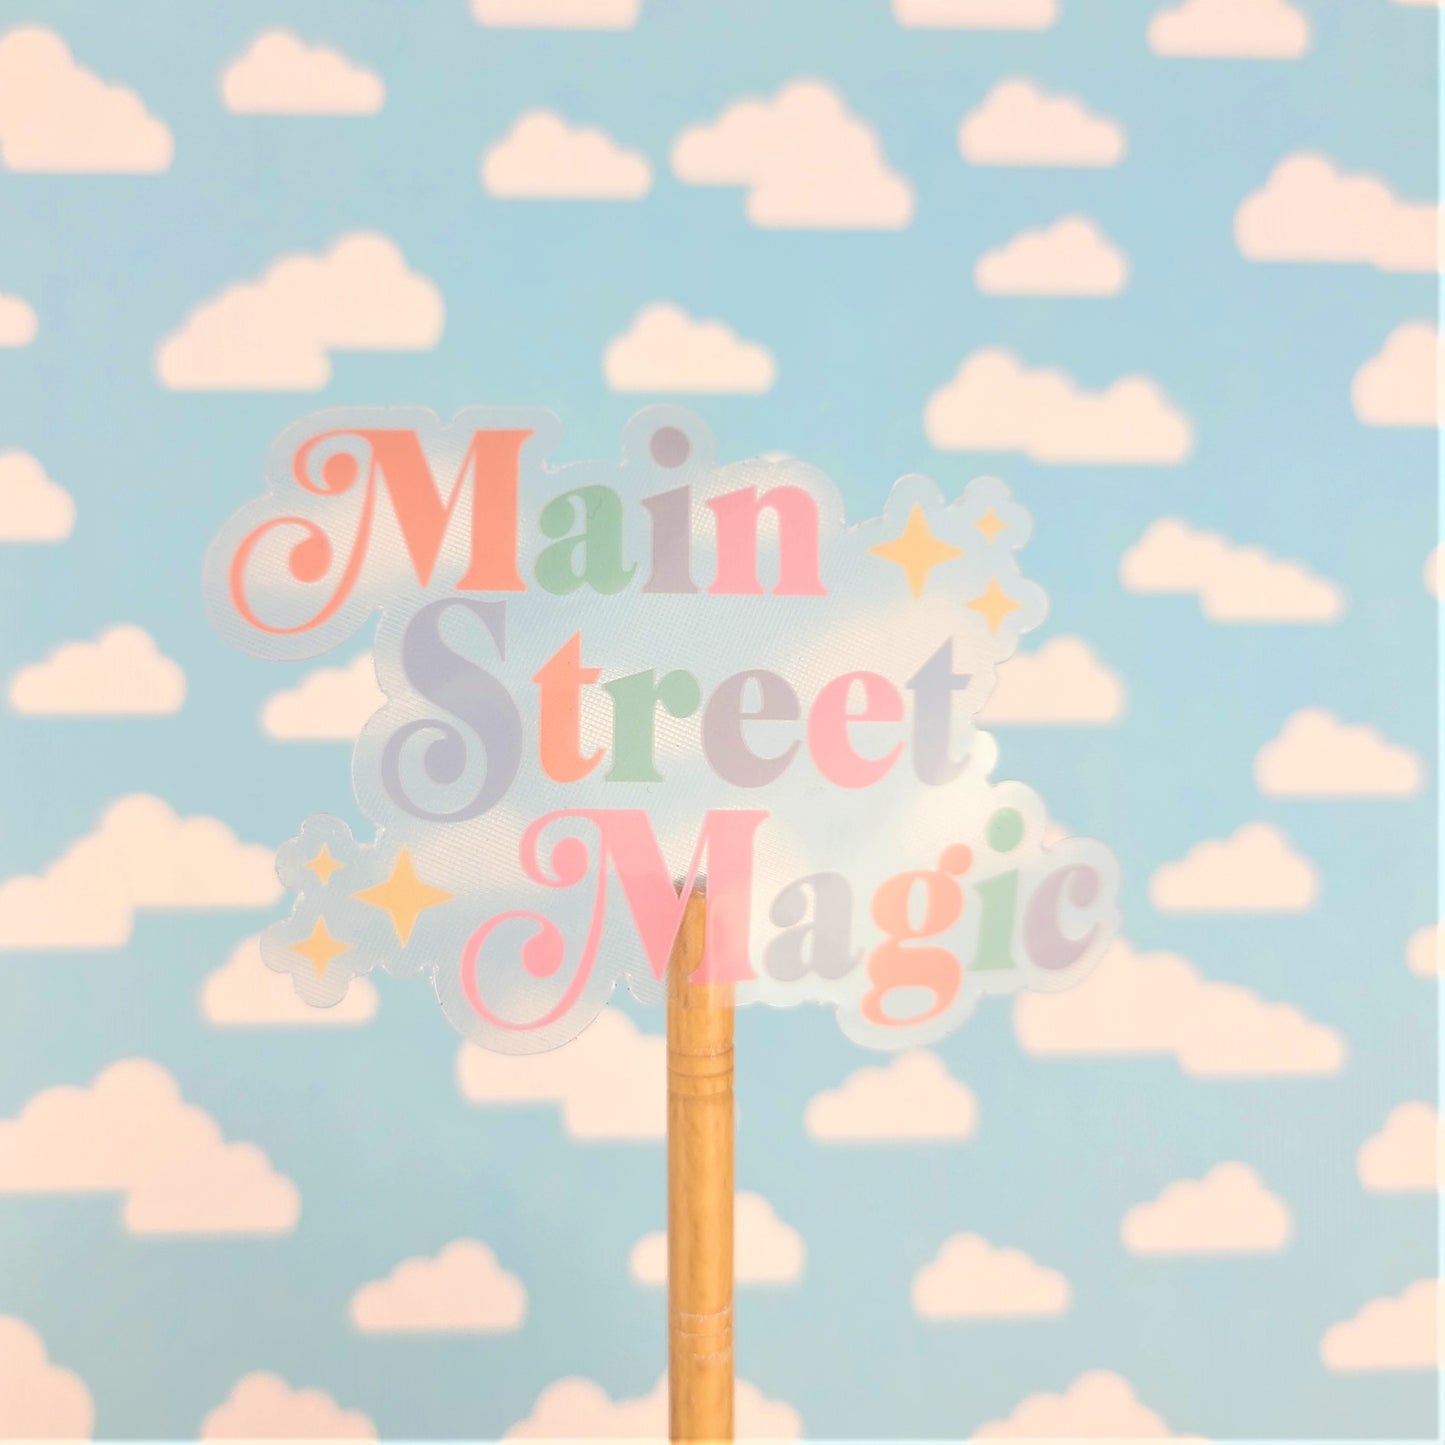 Main Street Magic Clear Vinyl Sticker